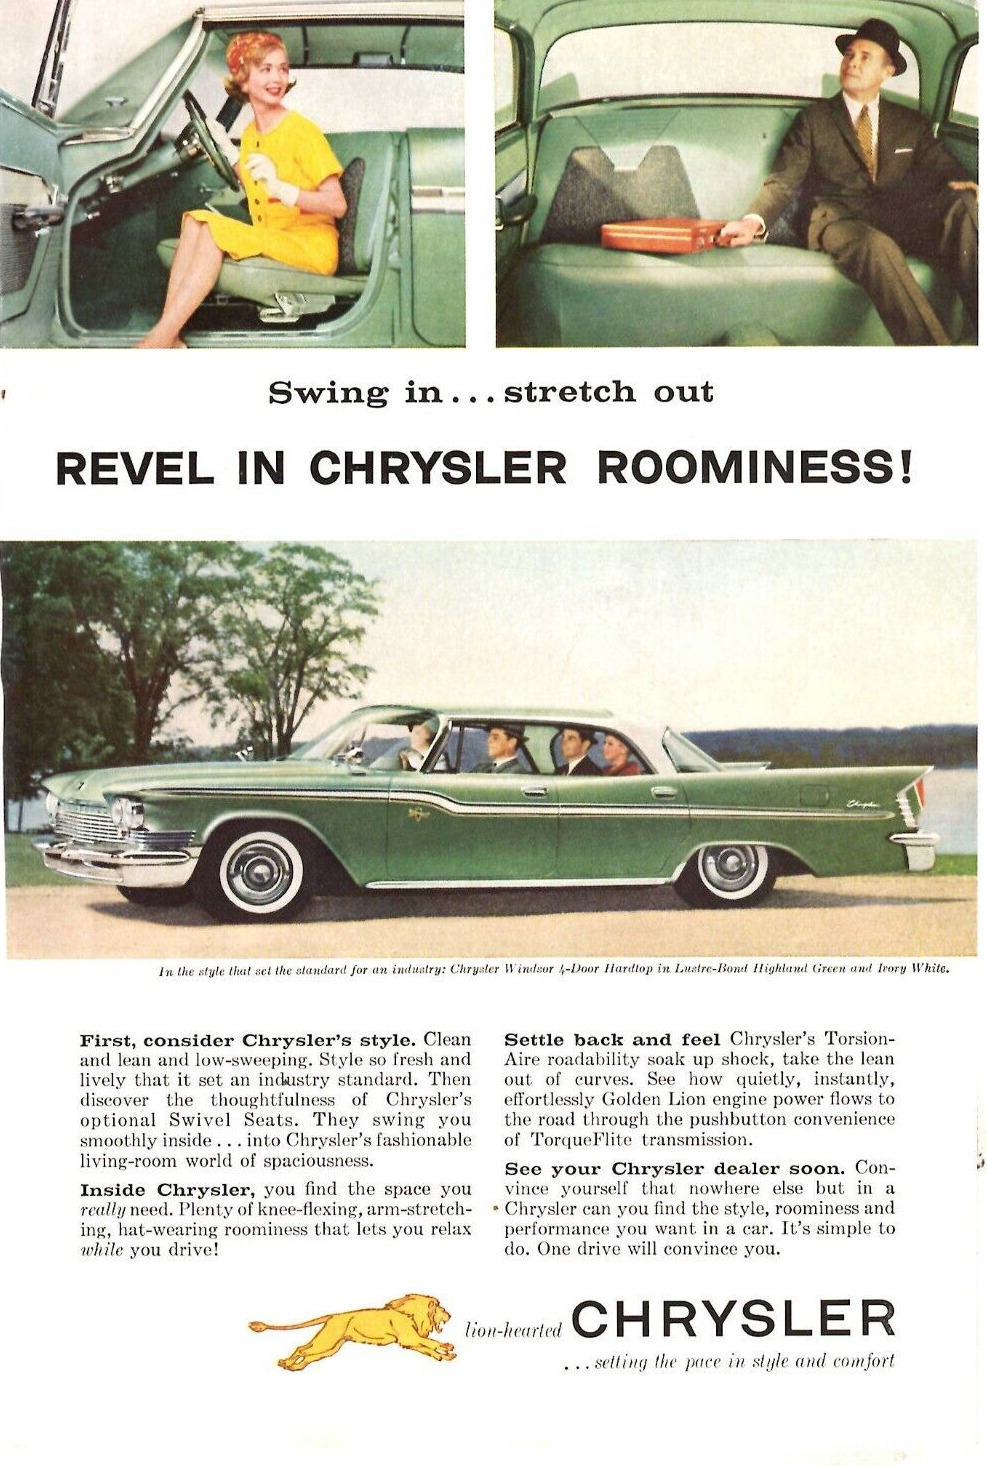 1959 Print Ad Chrysler Windsor 4-Door Hardtop in Lustre-Bond Highland Green